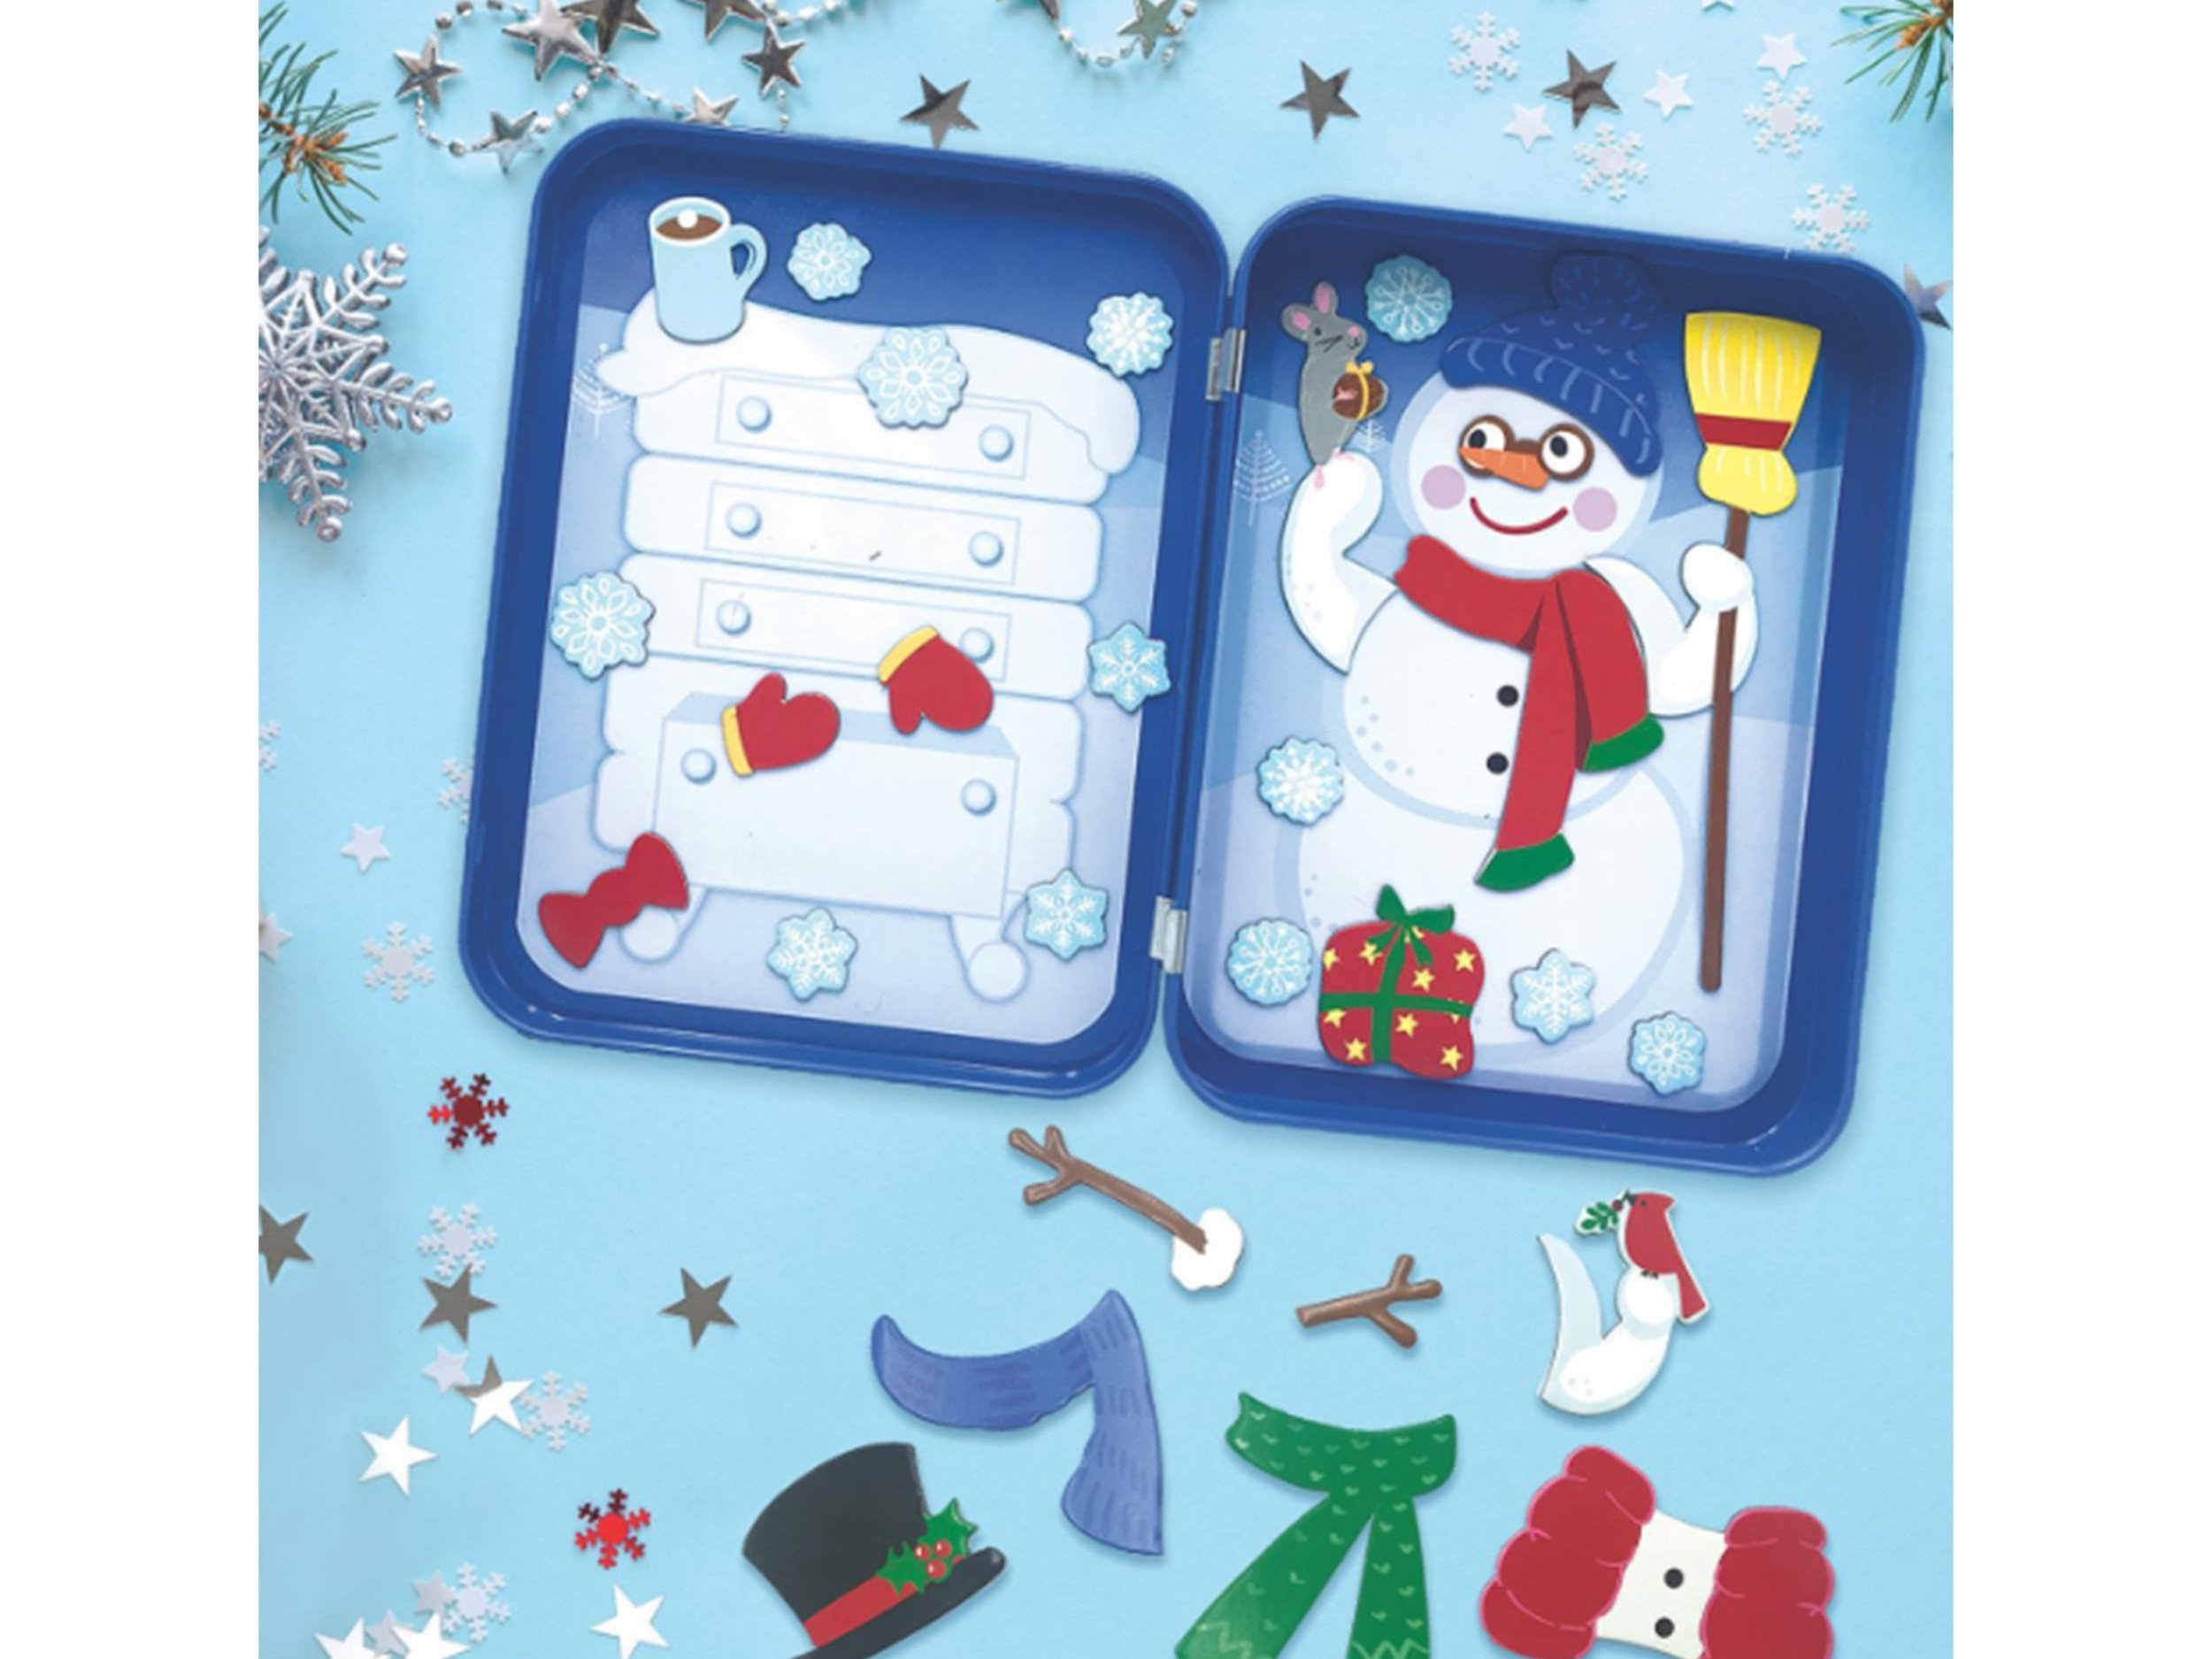 Snowman Magnet Playset for Walmart